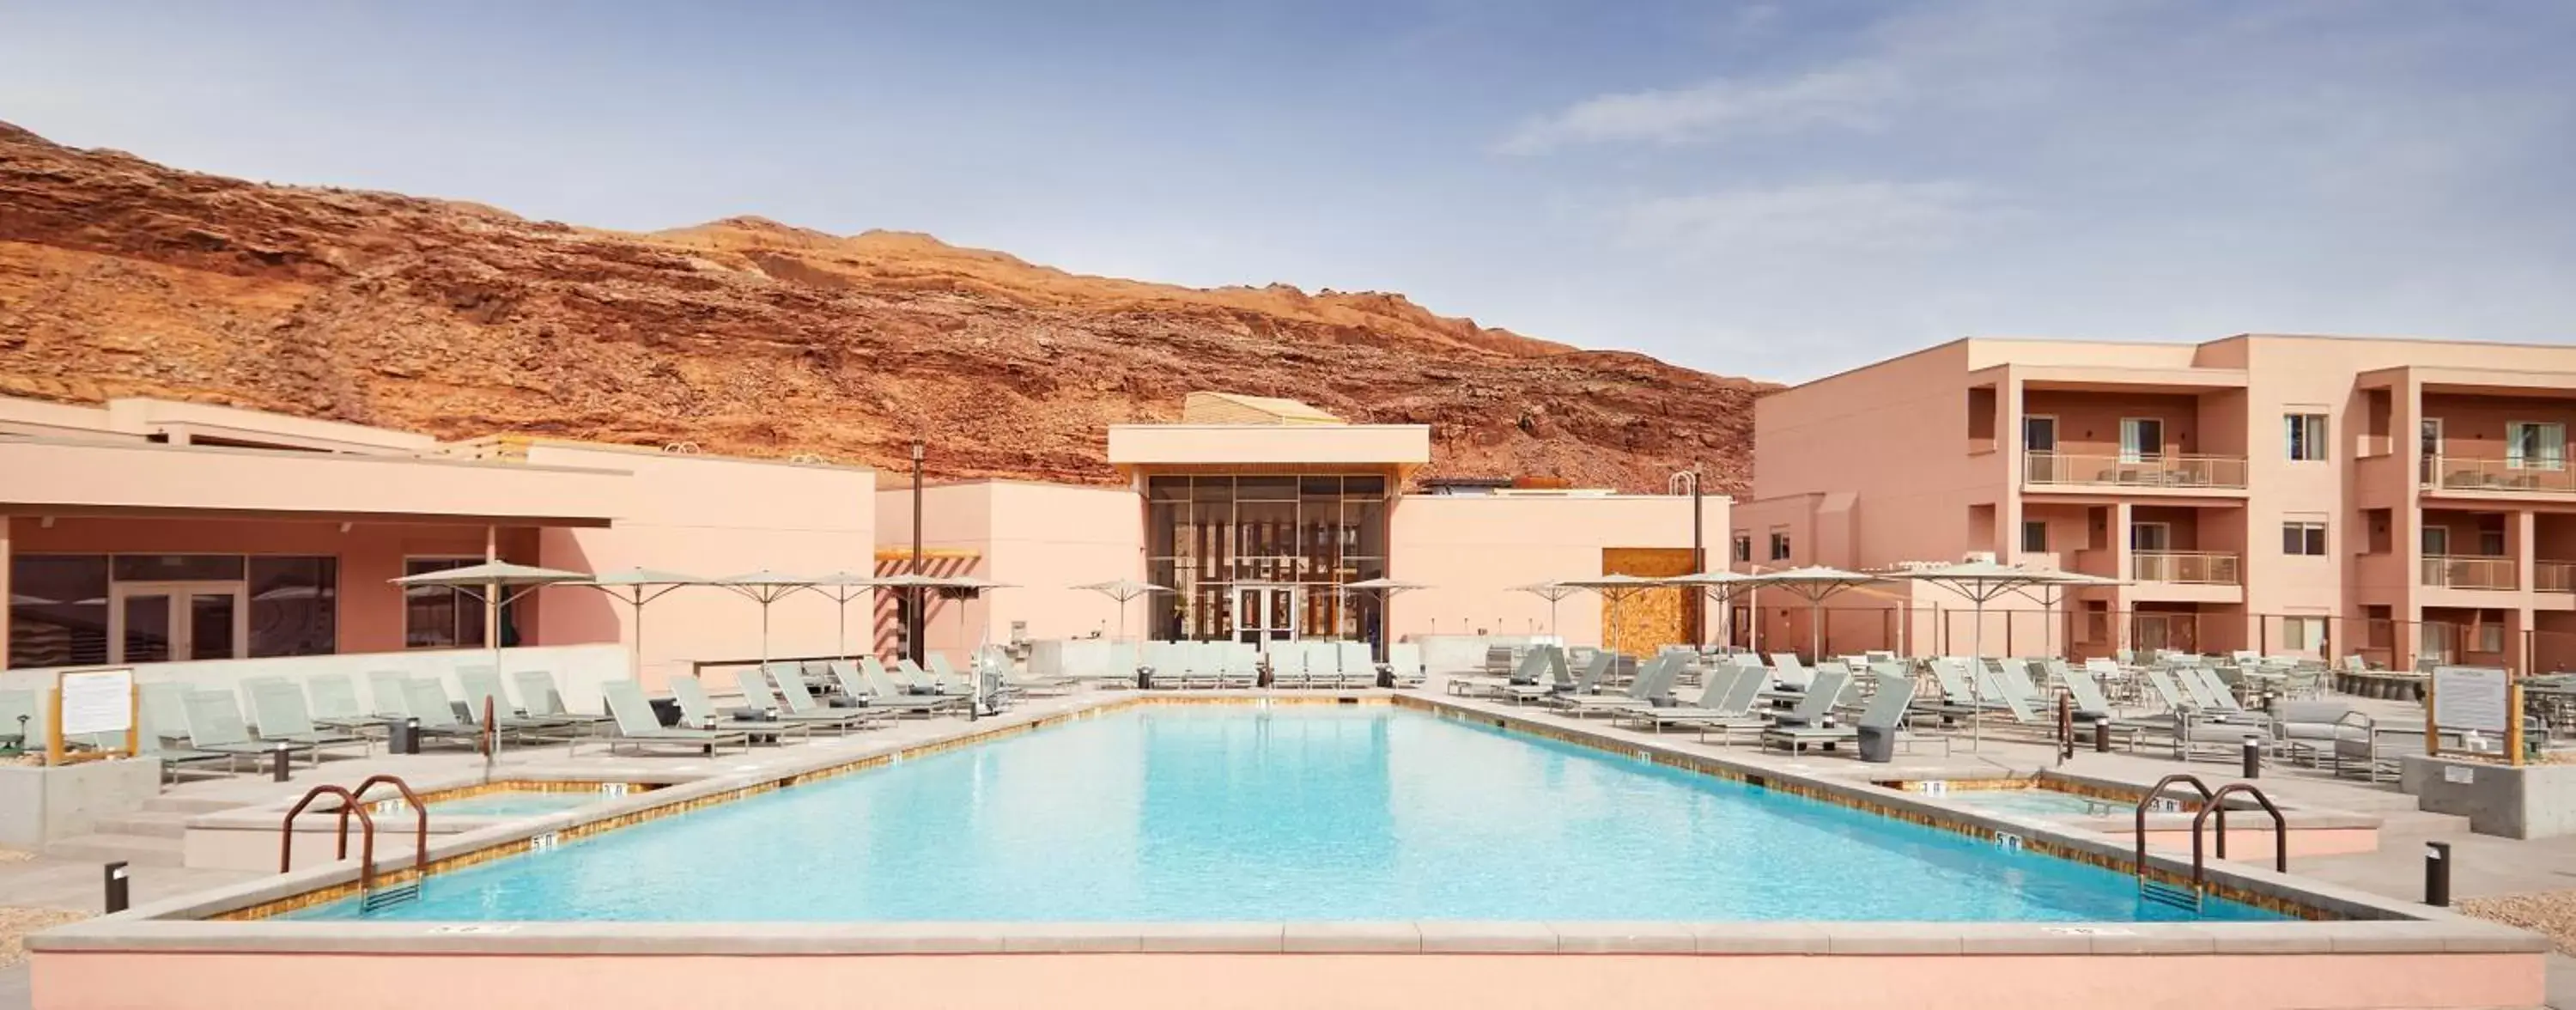 Swimming Pool in The Moab Resort, WorldMark Associate